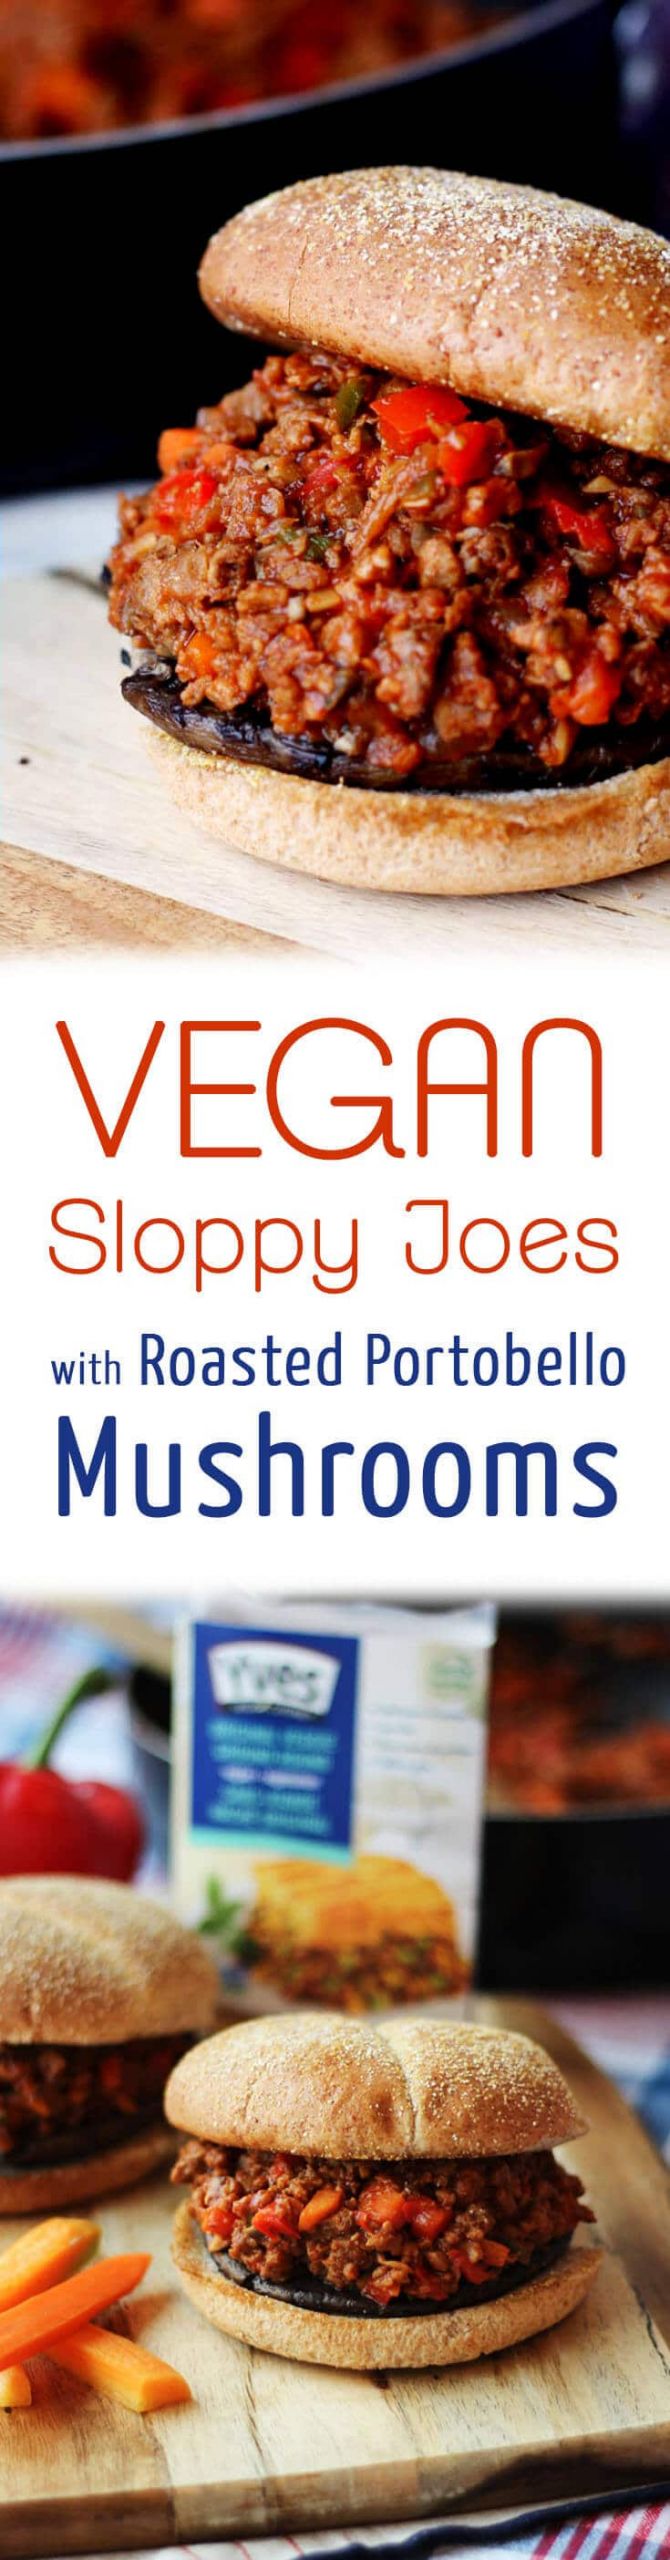 Vegan Sloppy Joes
 Vegan Sloppy Joes with Roasted Portobello Mushrooms